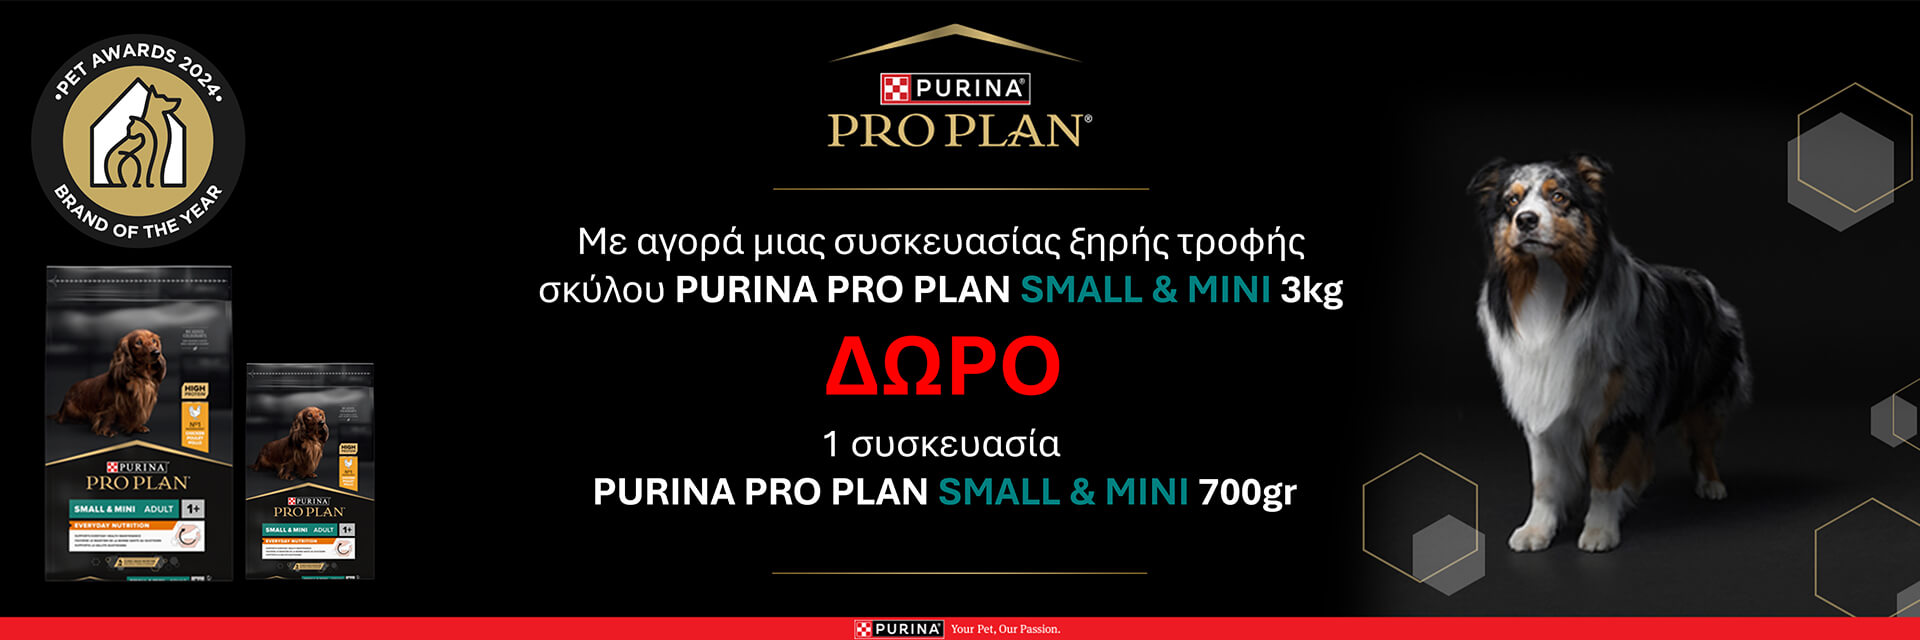 proplan_offer